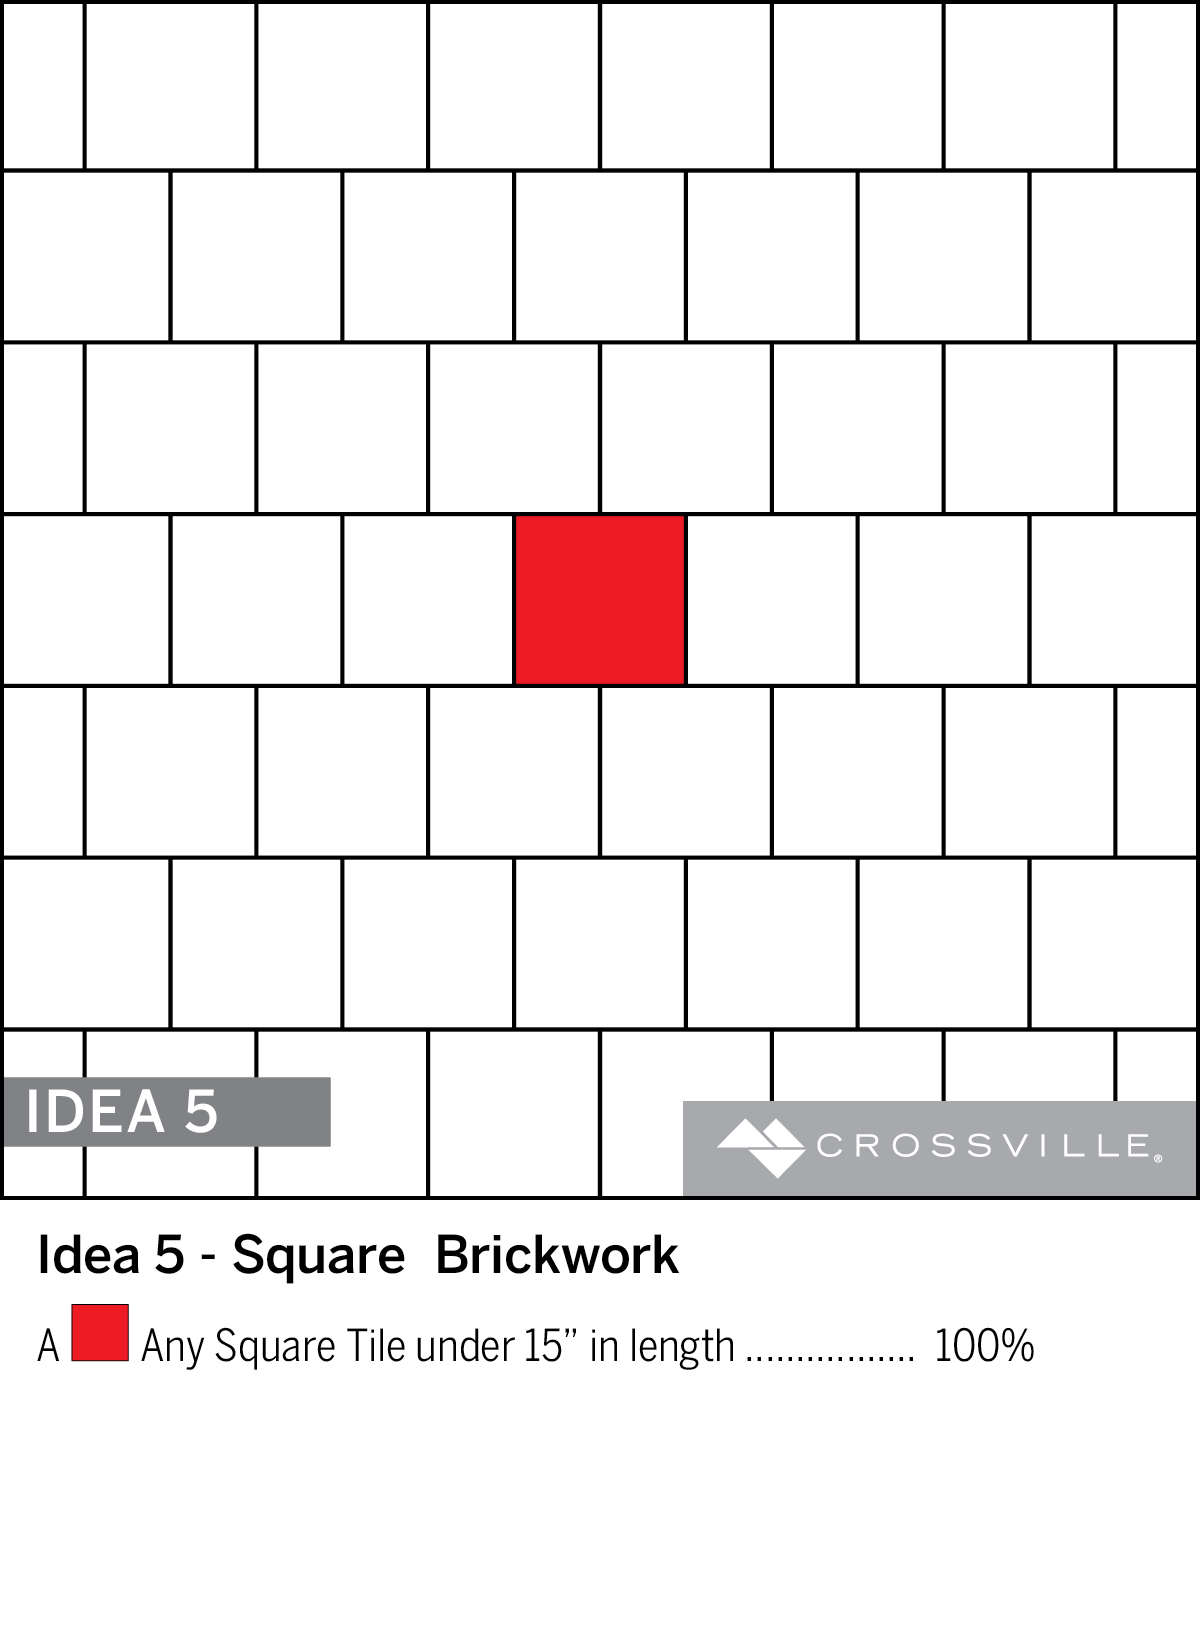 Square Brickwork